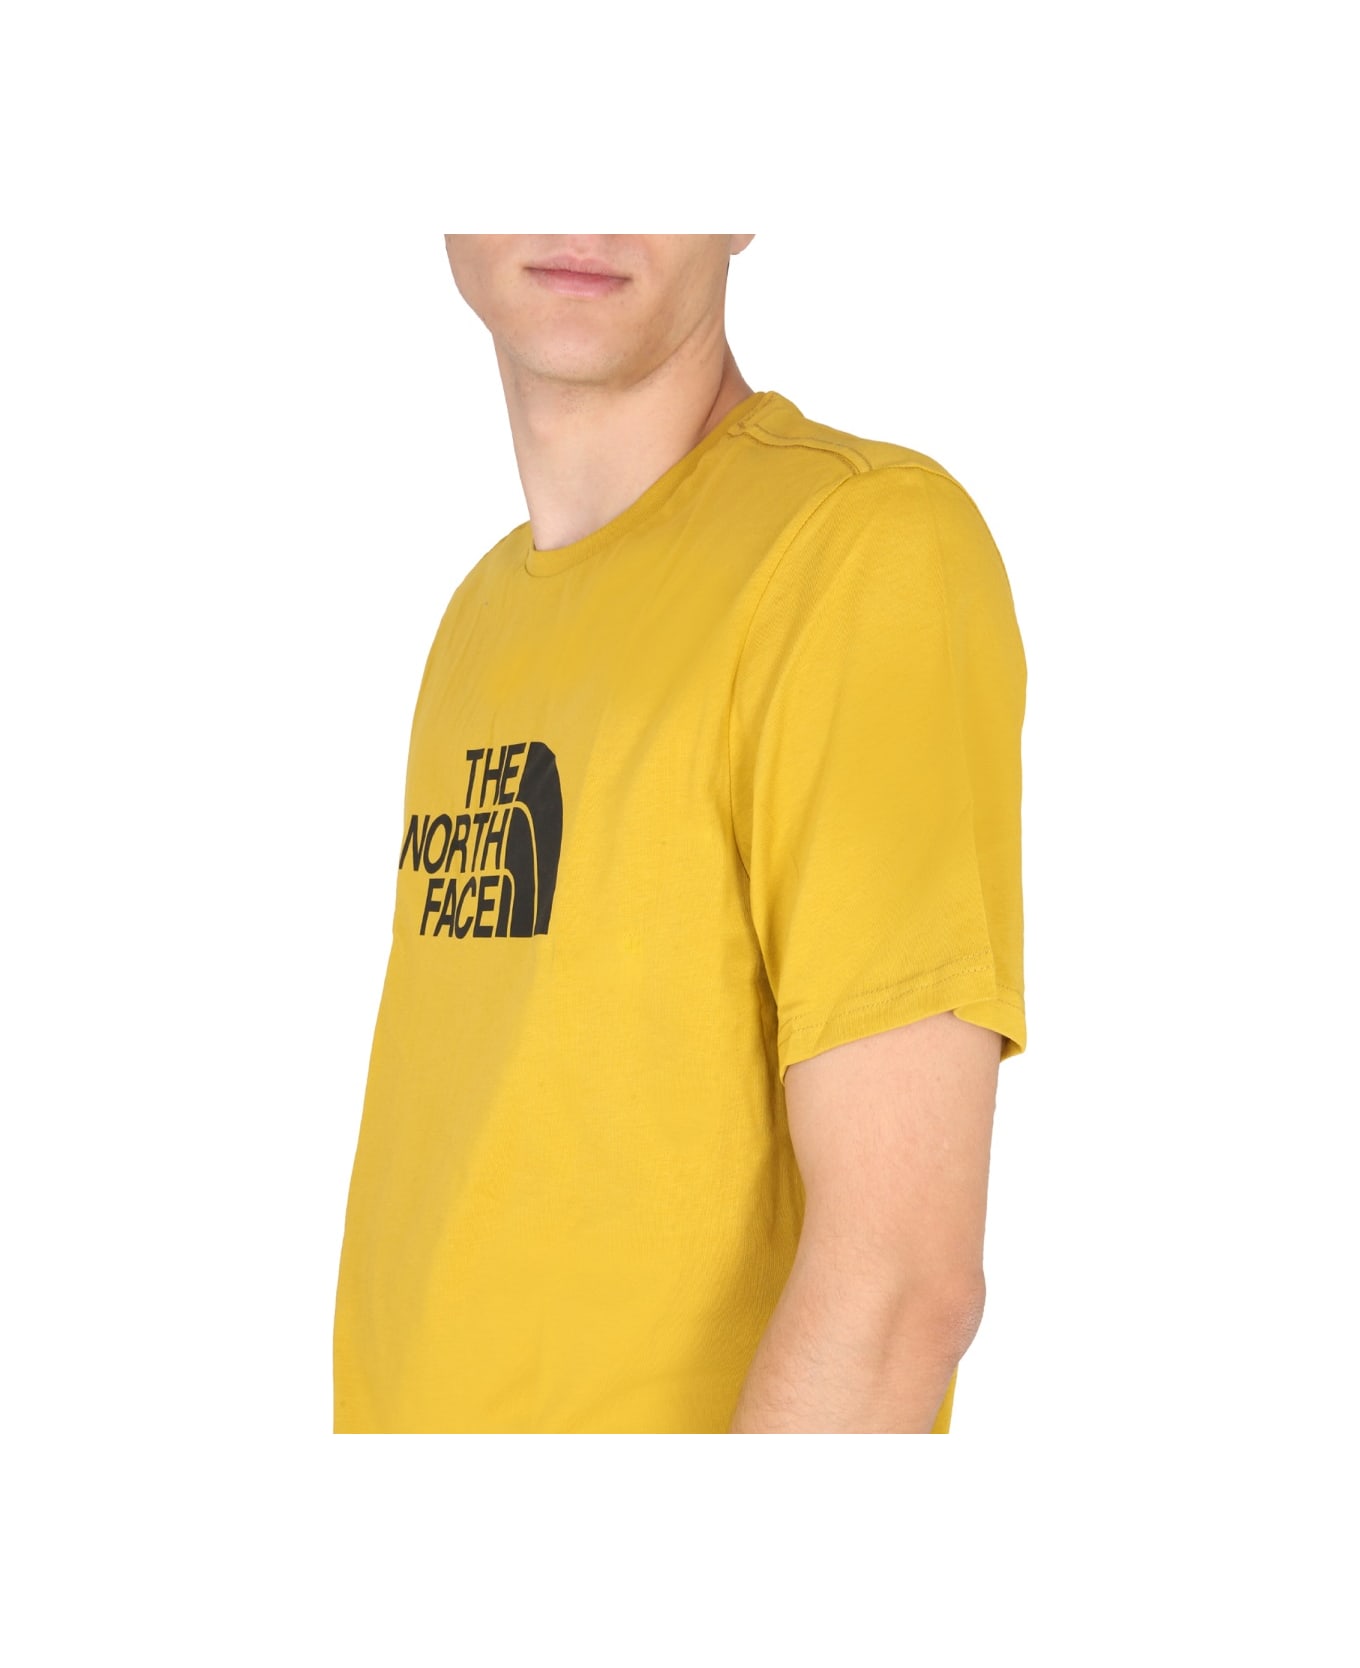 The North Face Crewneck T-shirt - YELLOW